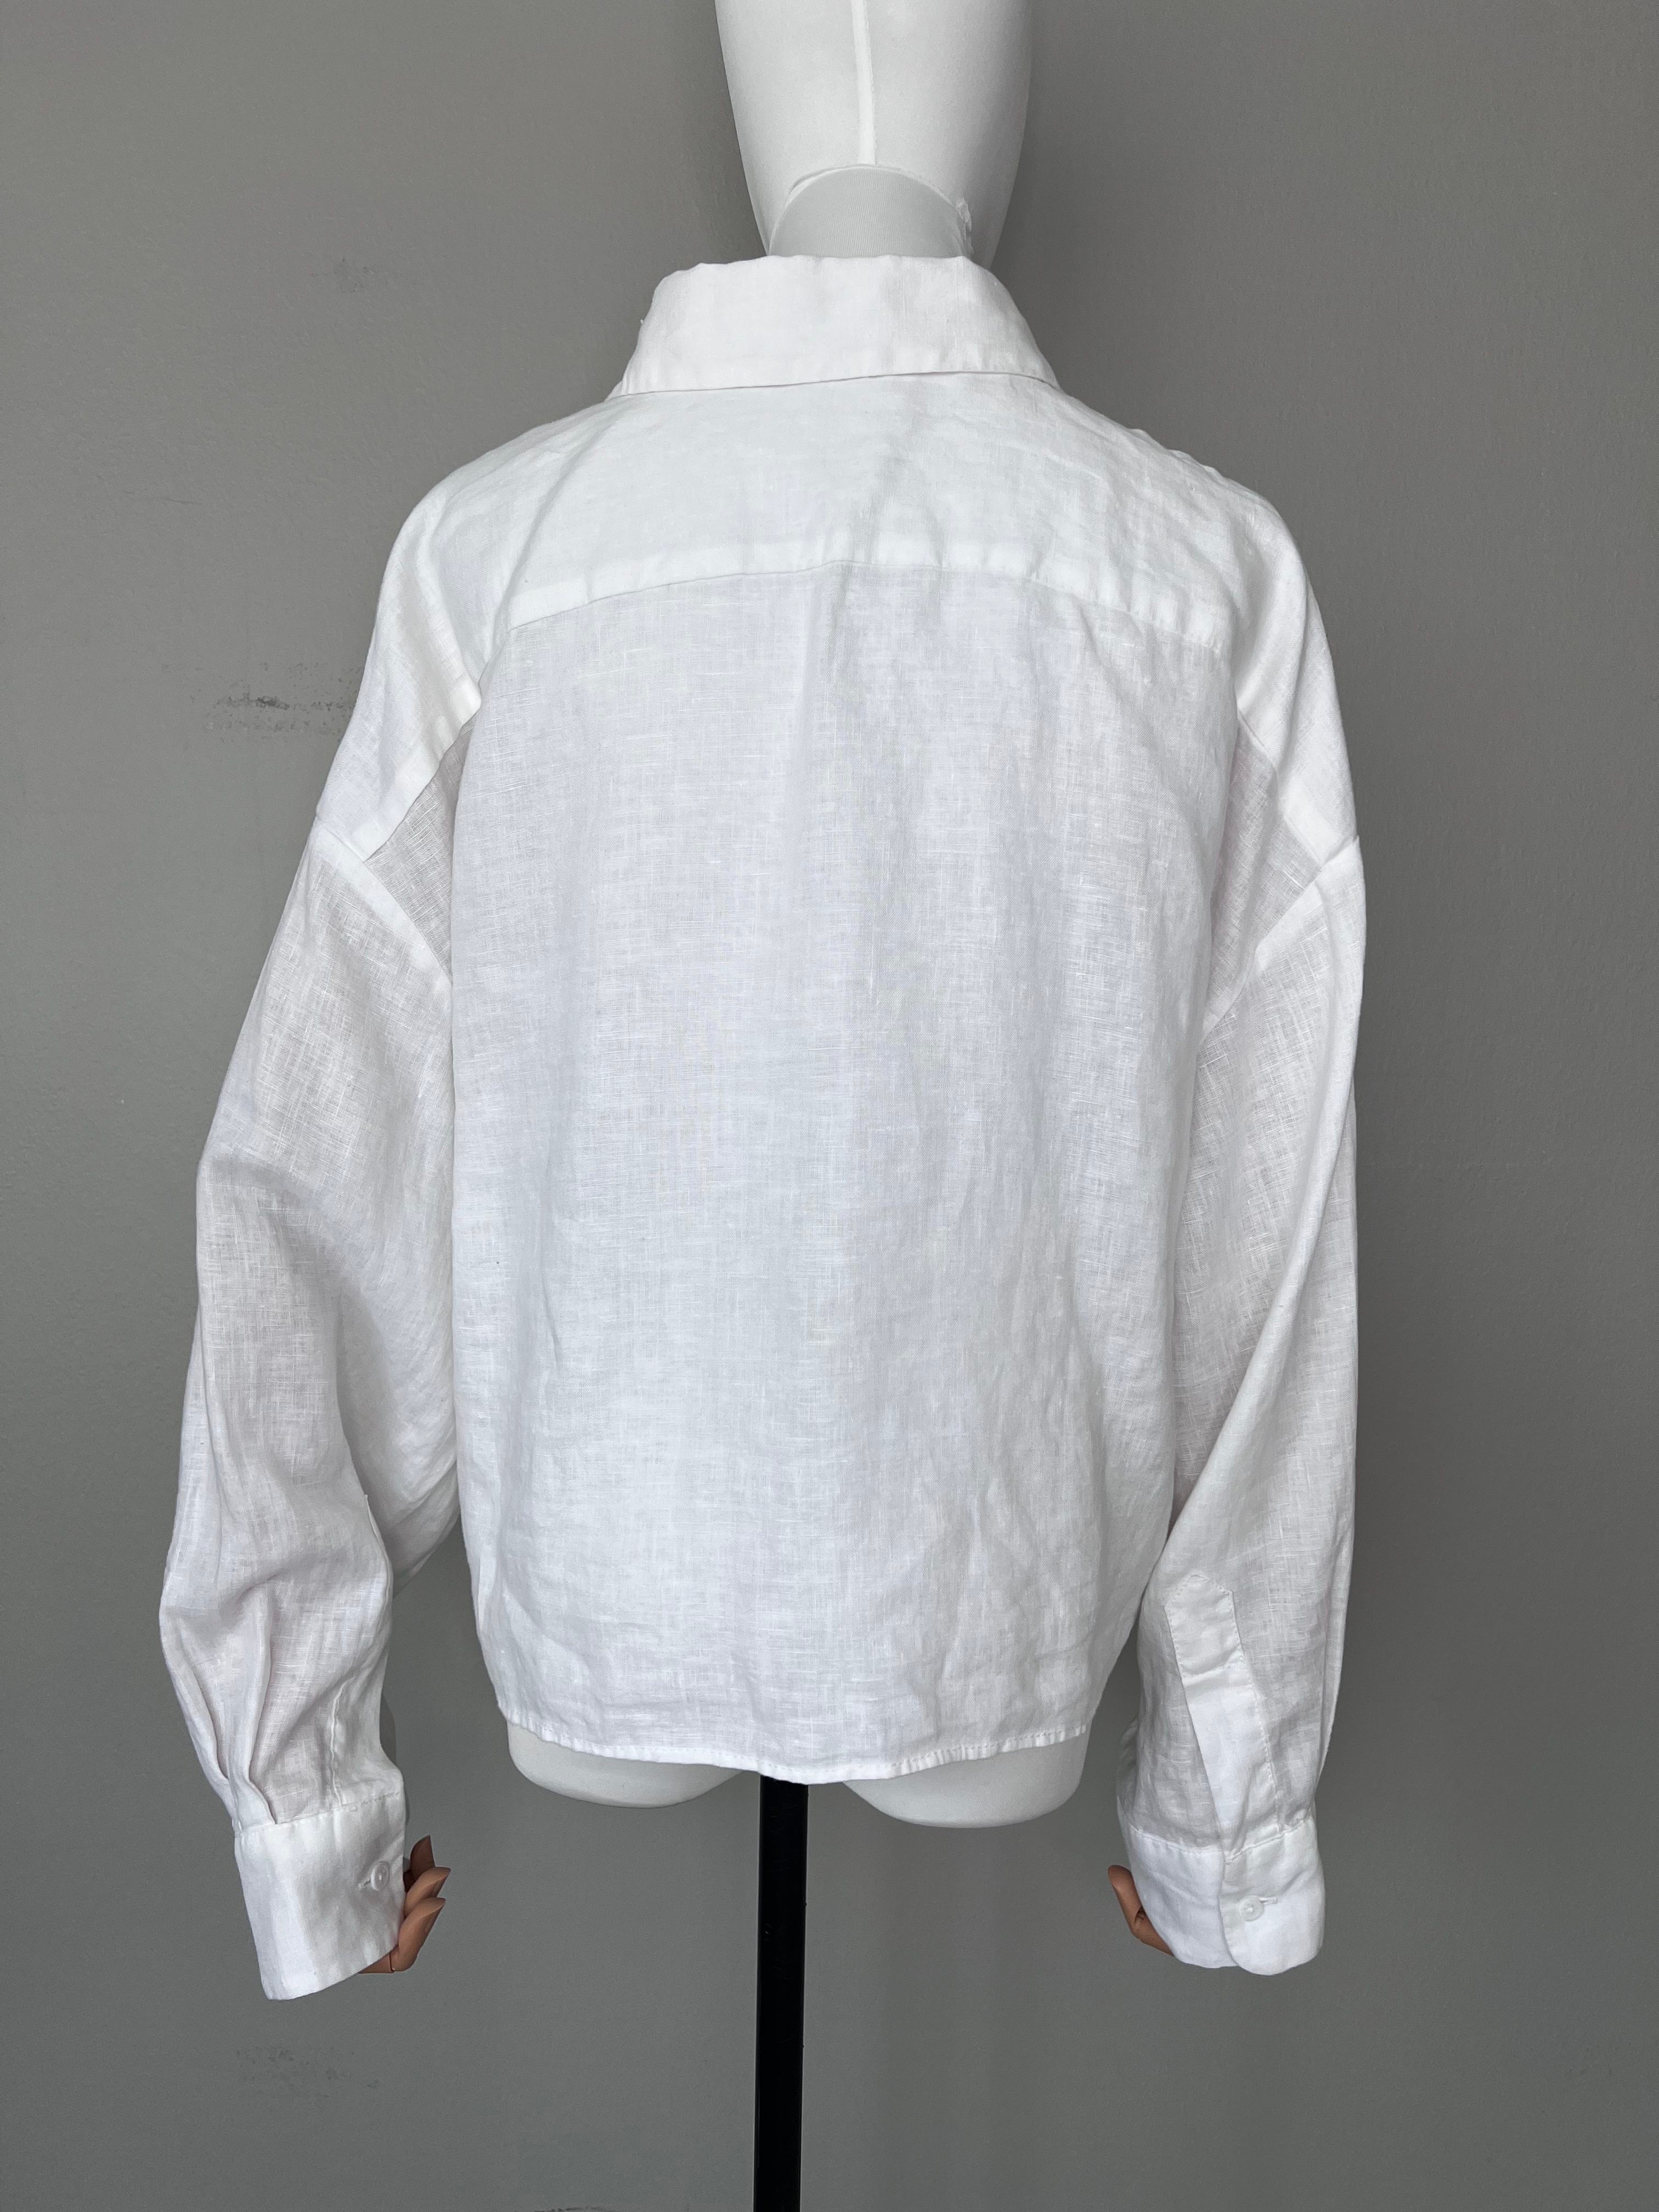 White linnen cropped button down shirt. - ZARA